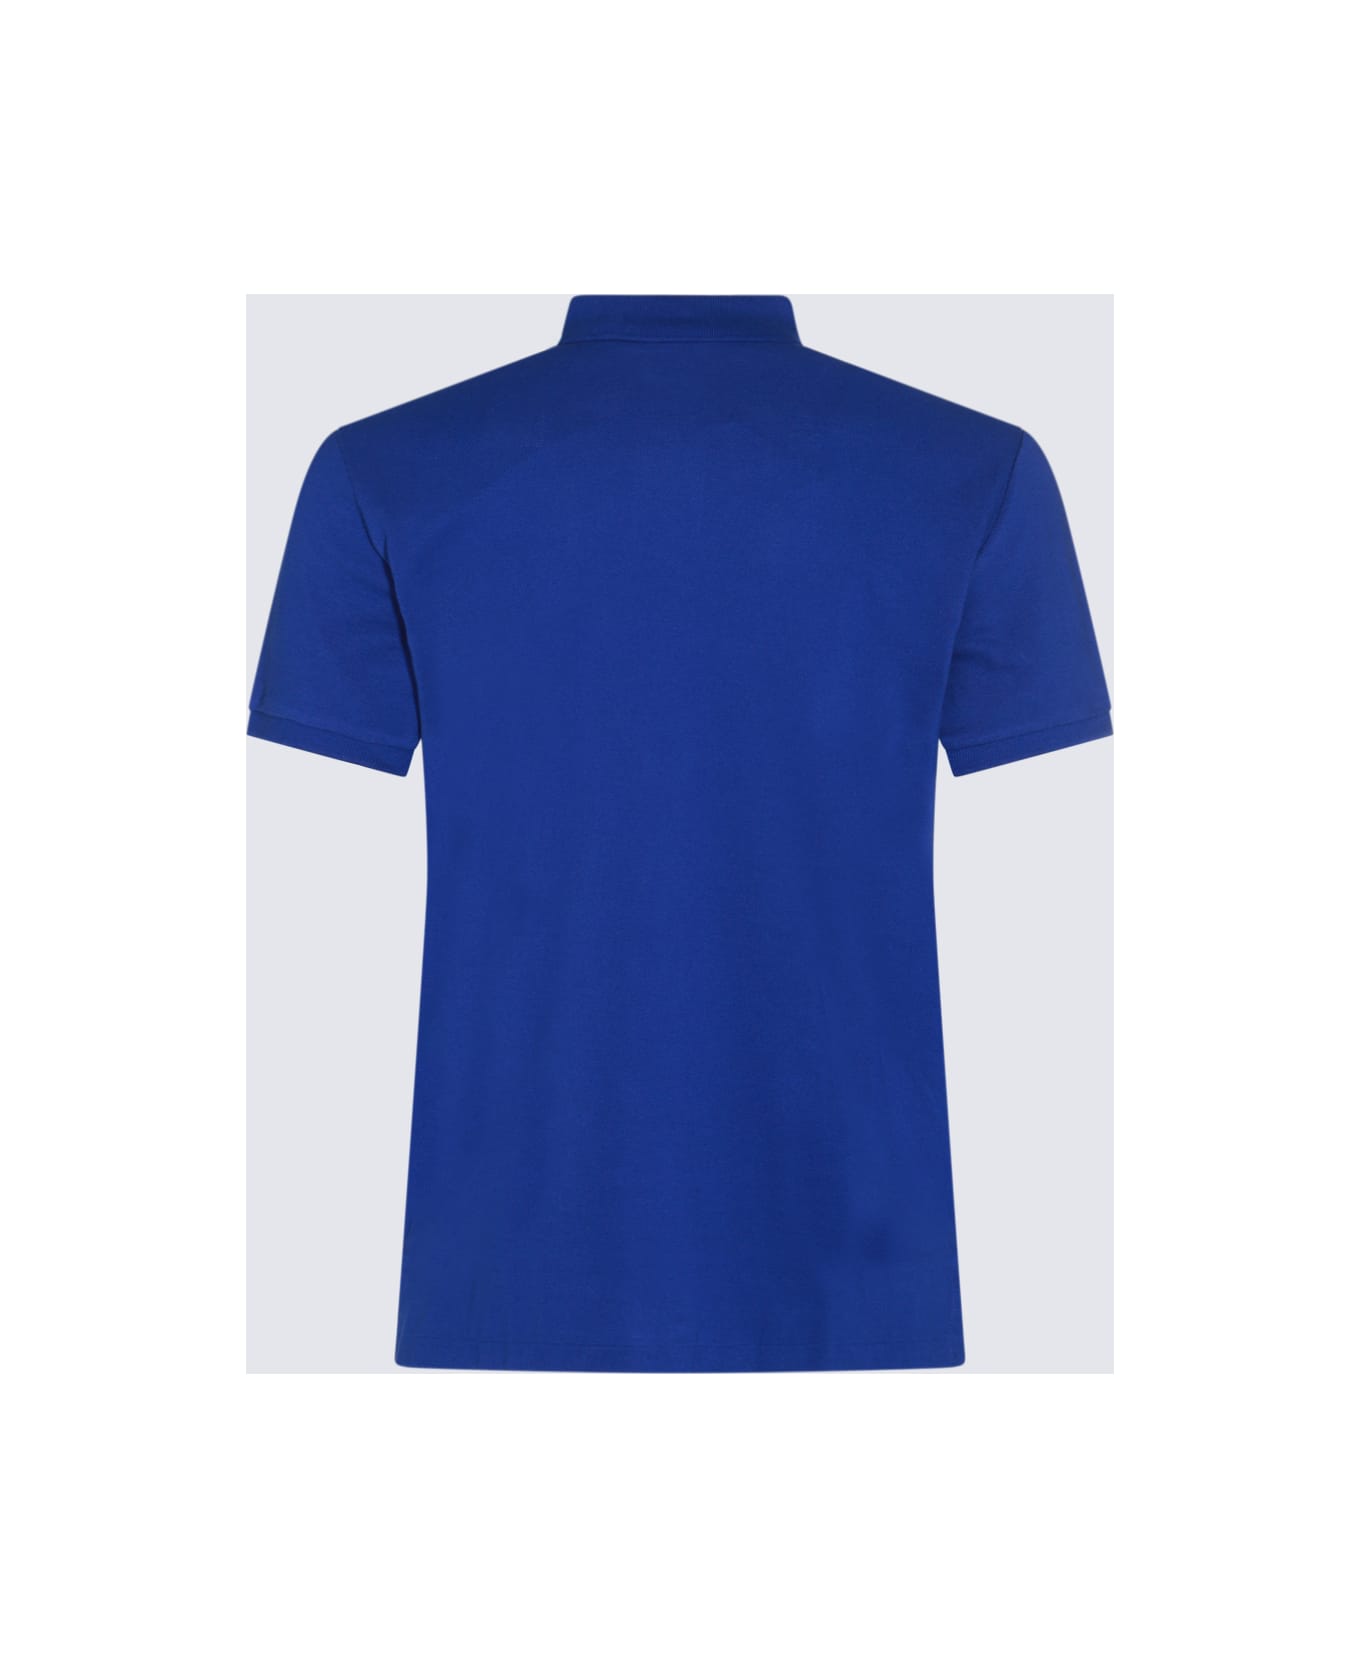 Polo Ralph Lauren Blue Cotton Polos Shirt - HERITAGE ROYAL